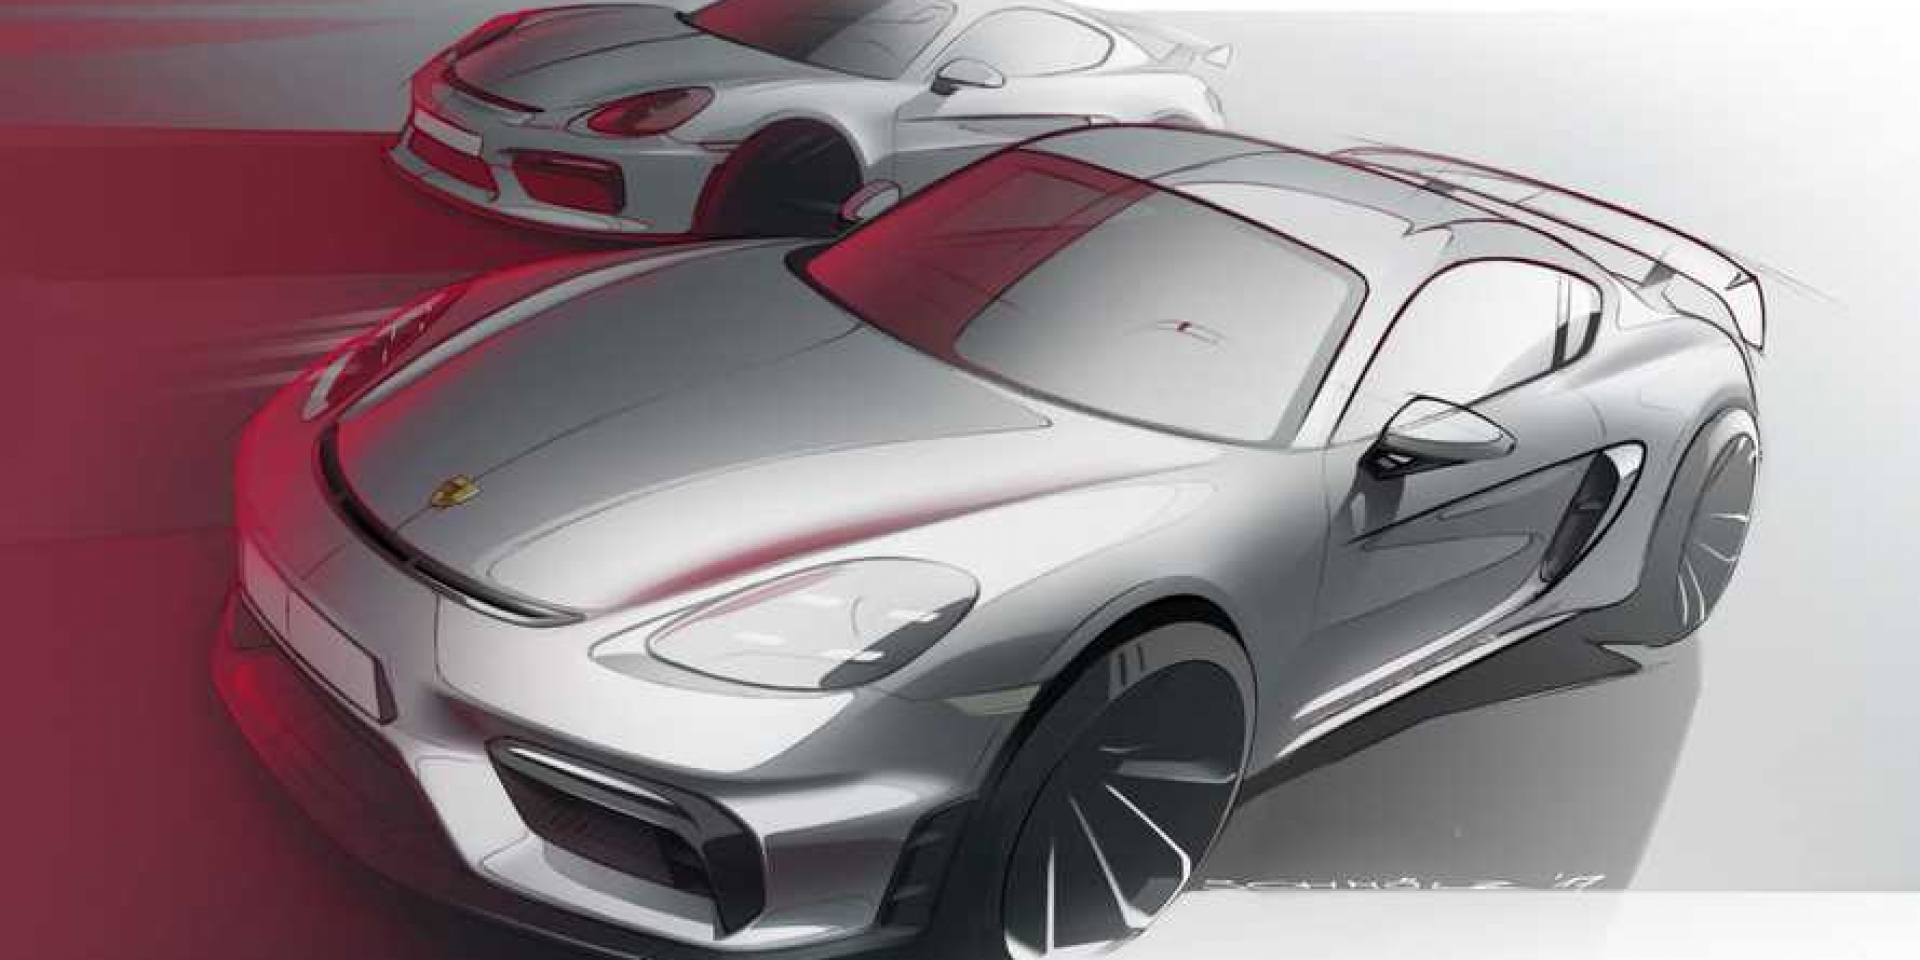 Porsche入門電動車 Cayman Electric將擁有400hp動力！